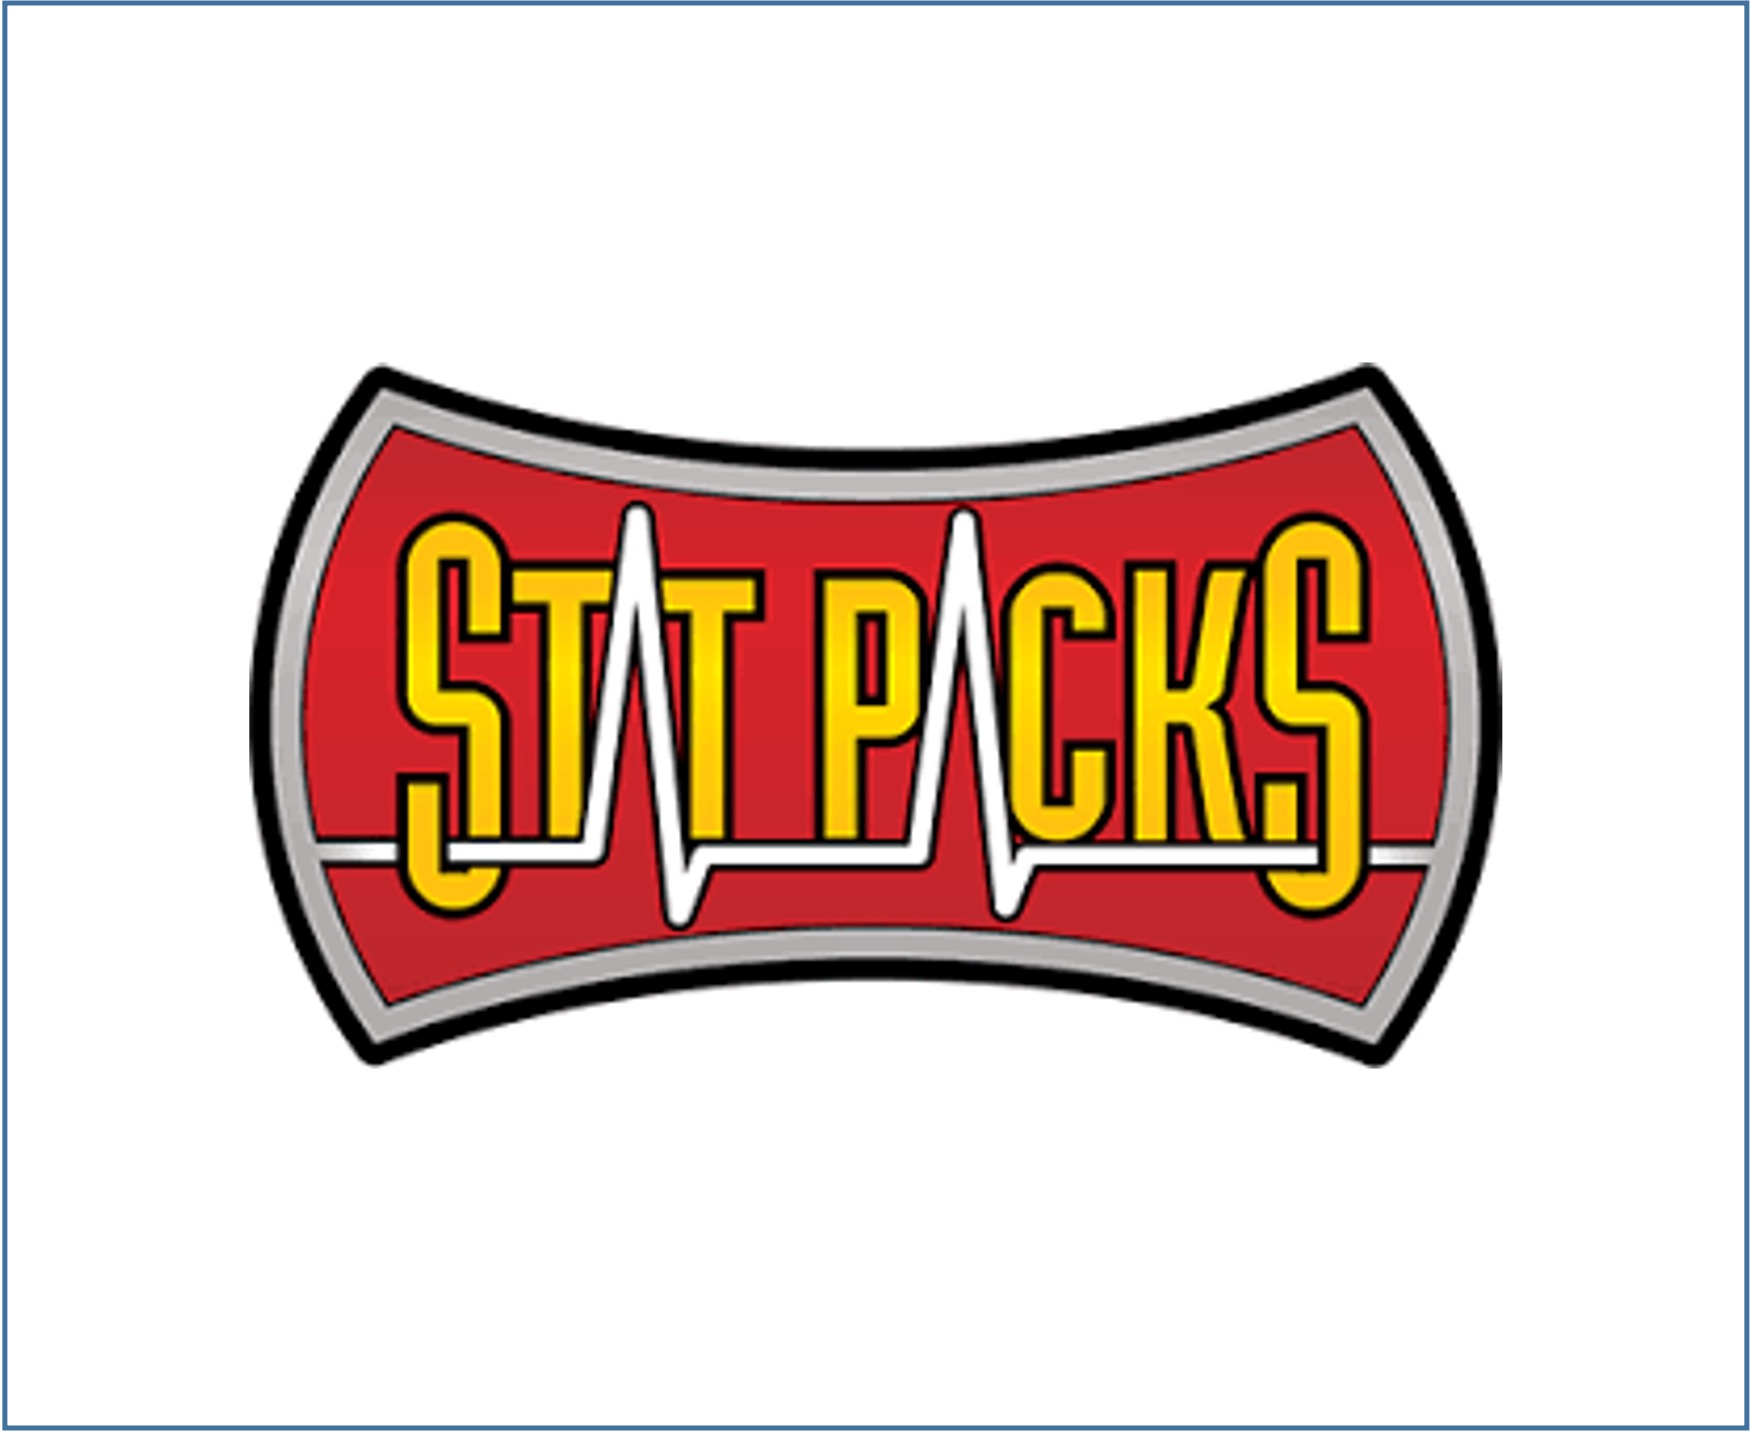 StatPacks